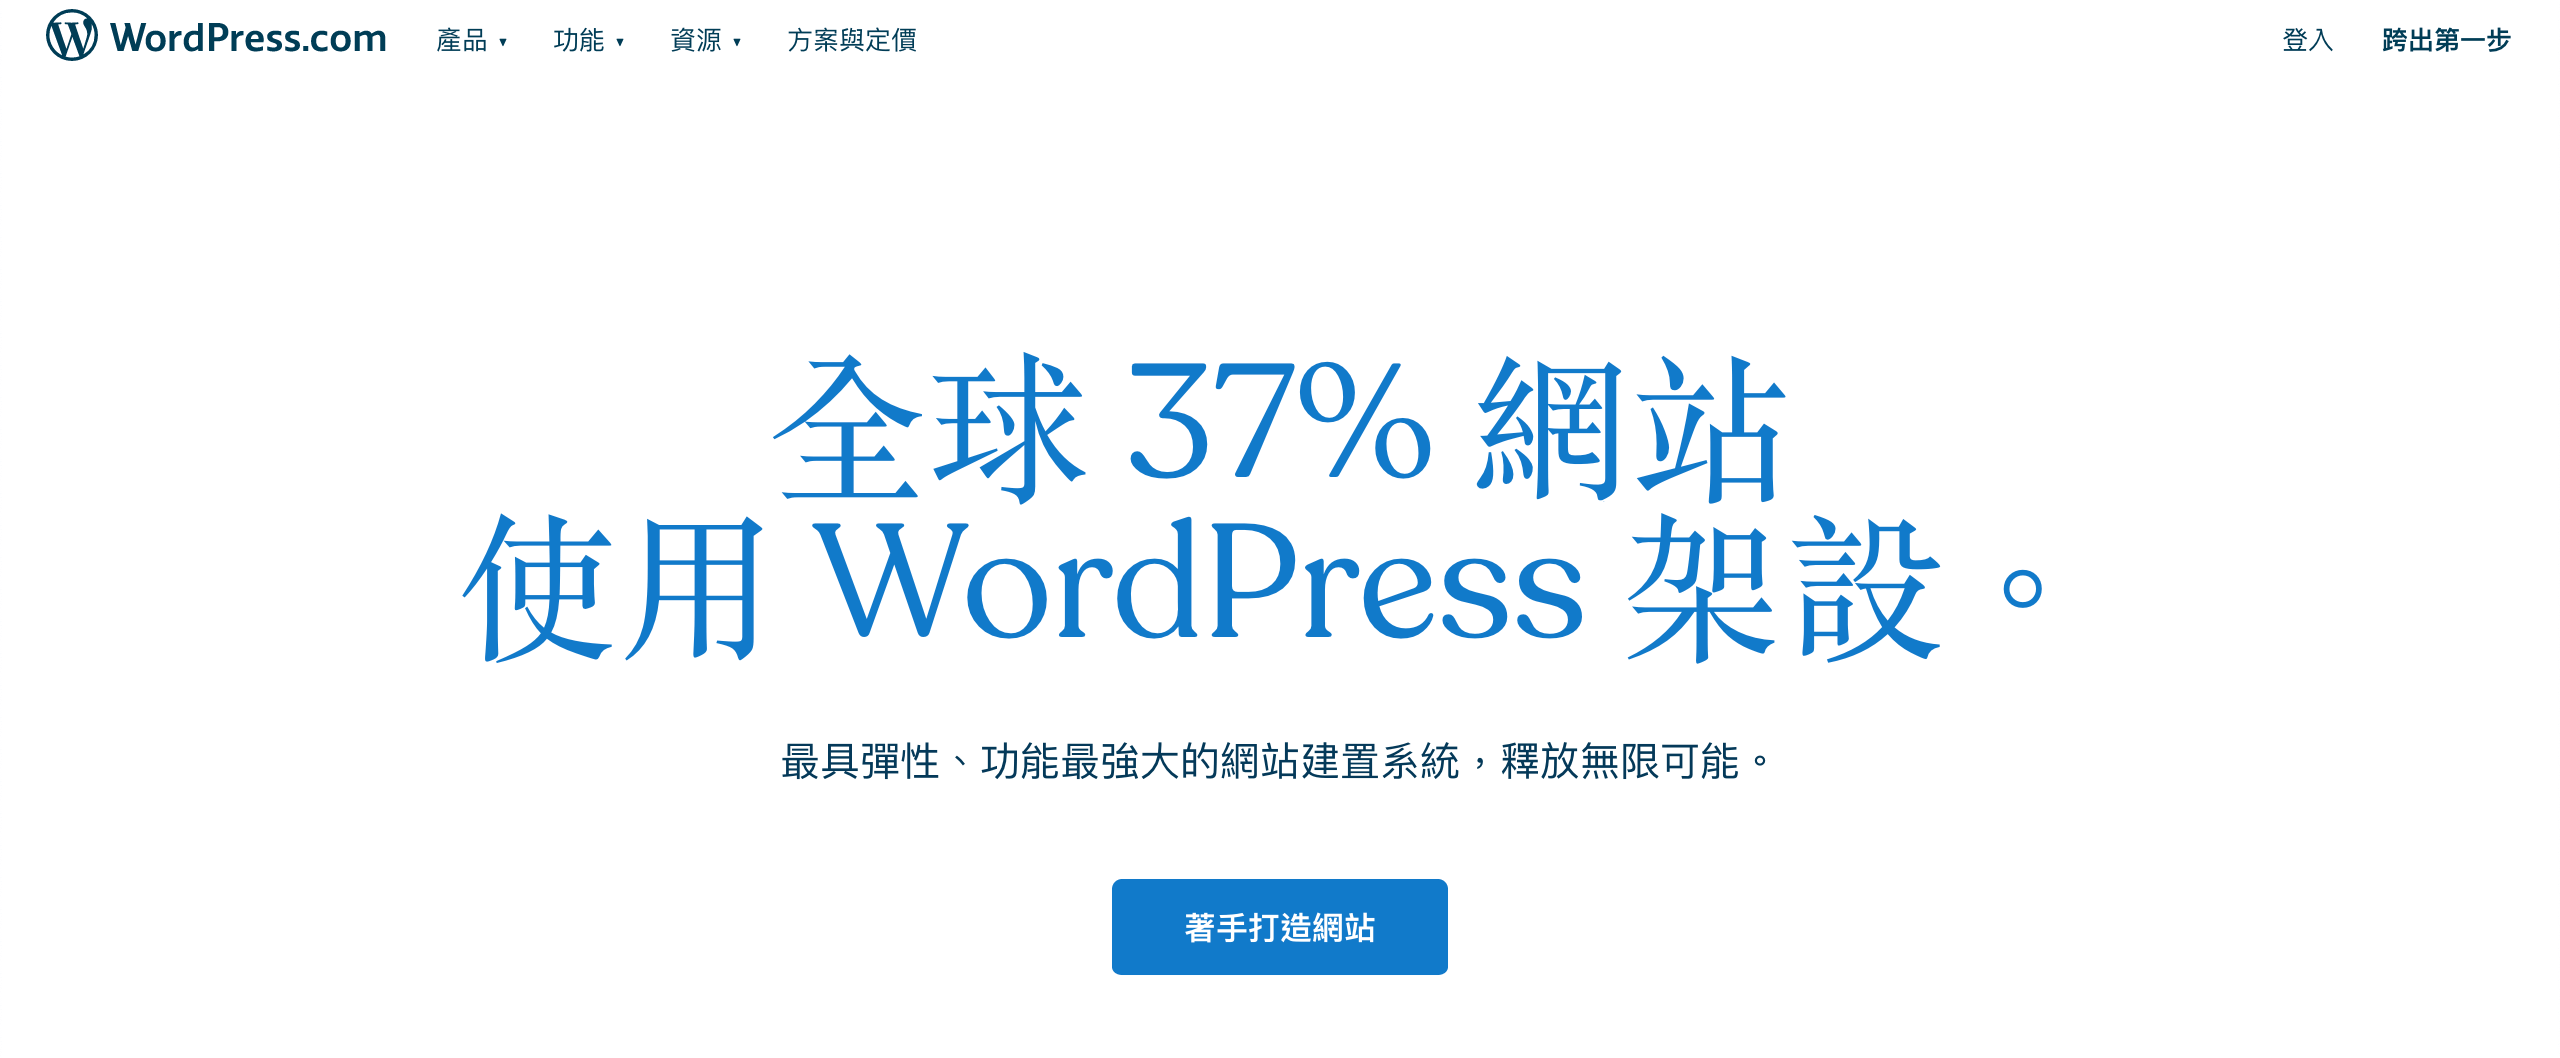 WordPress 網站使用人數